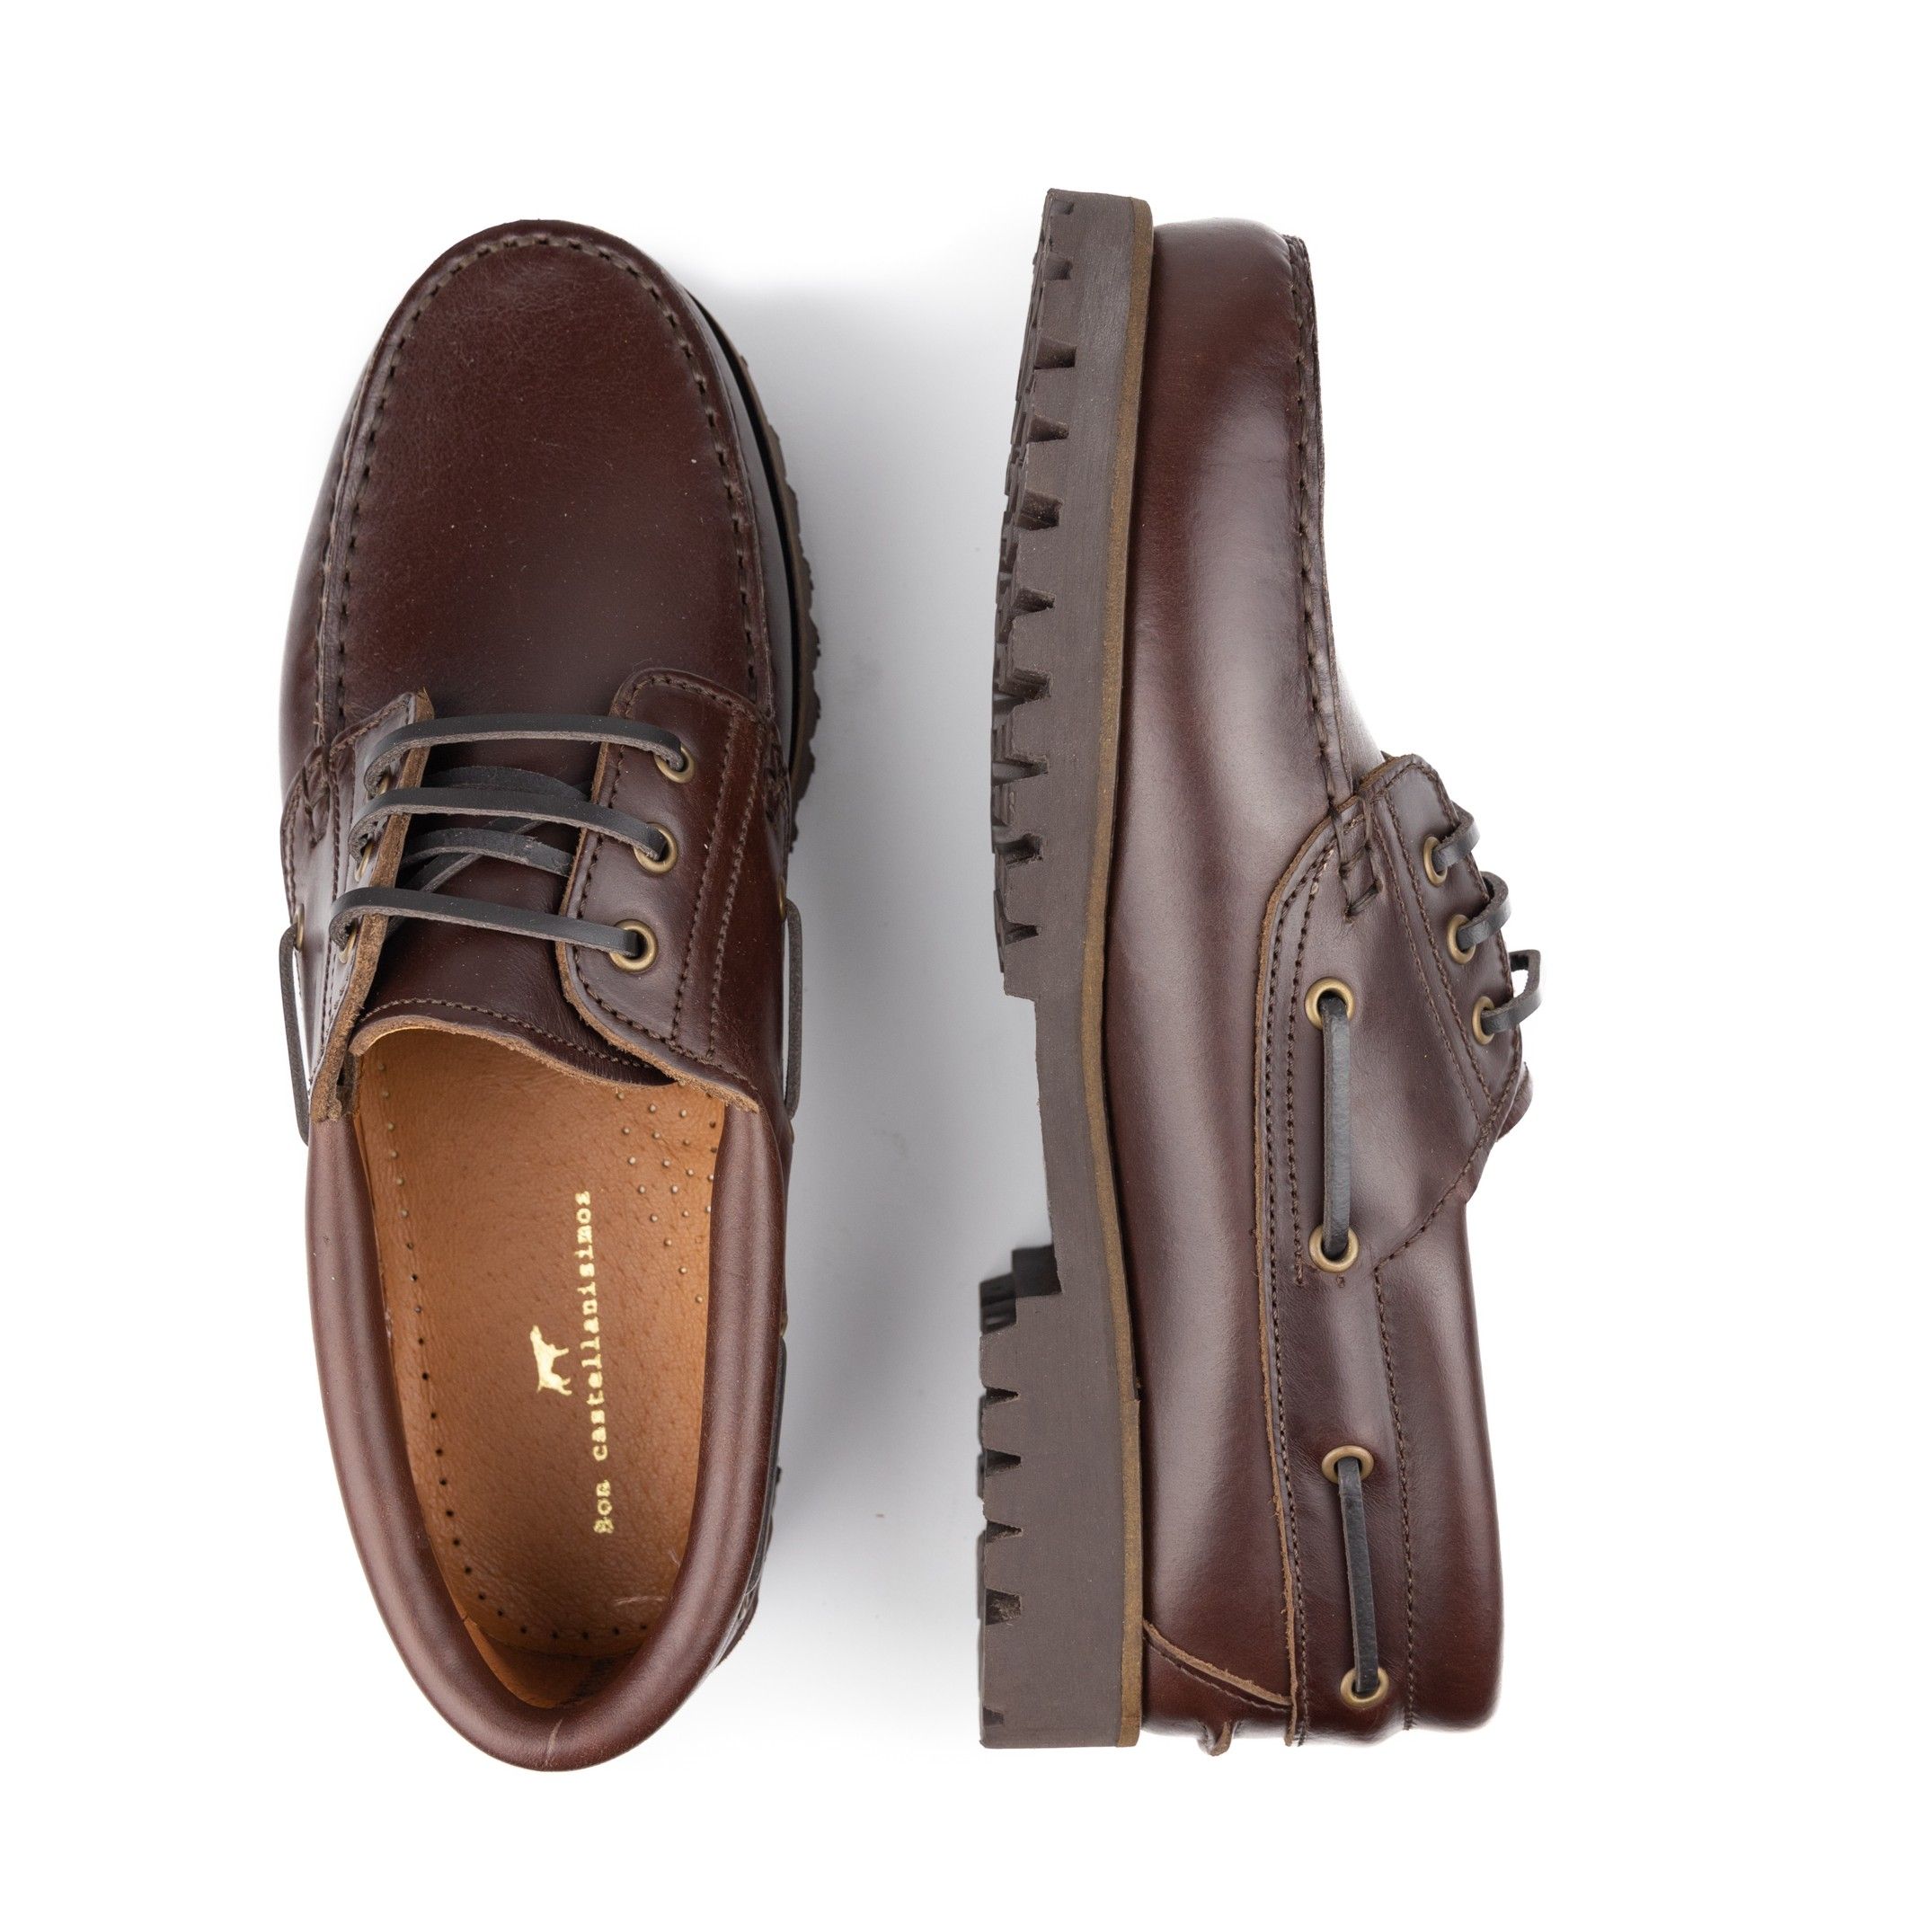 Castellanisimos Classic Leather Boat Shoes Men Brown